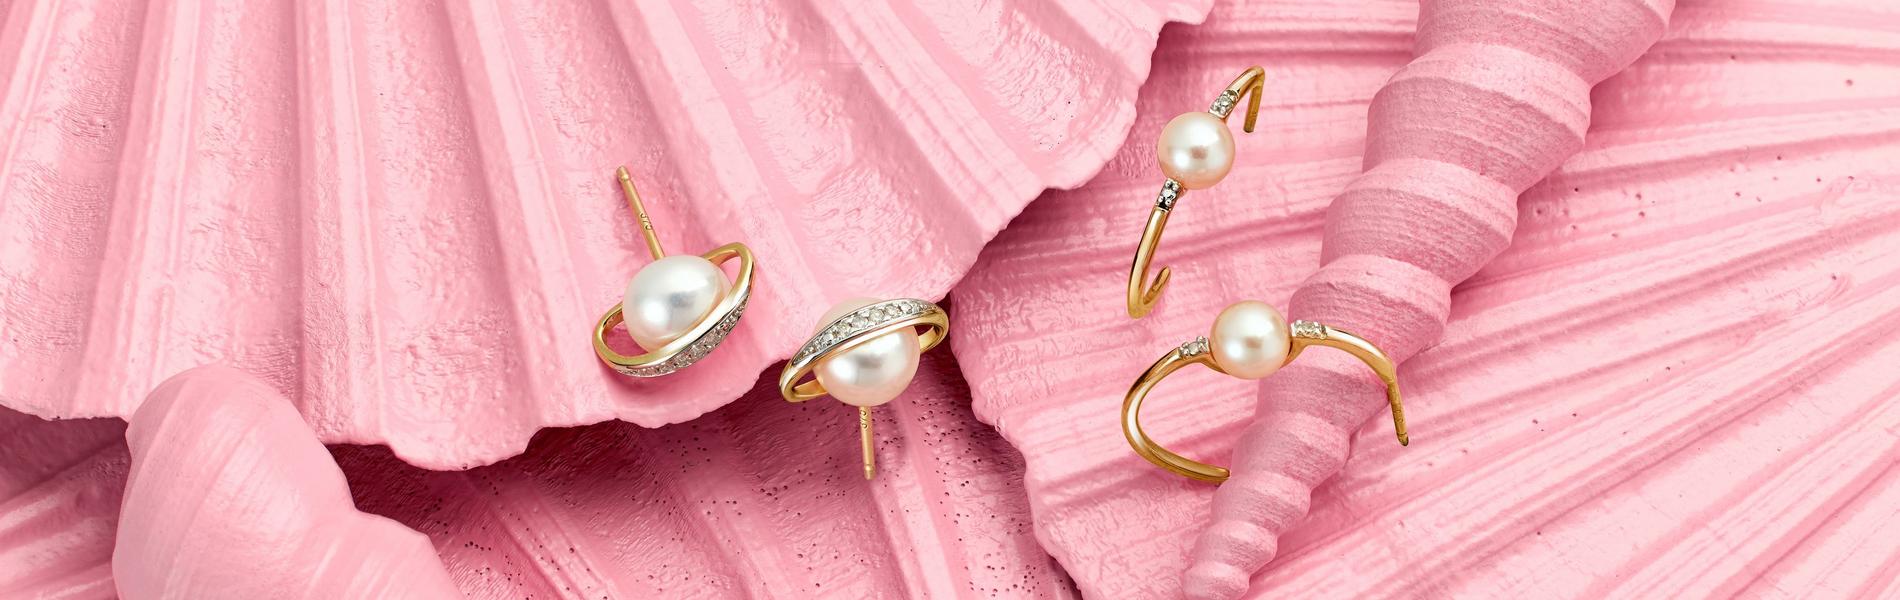 Pearl jewellery on pink shells